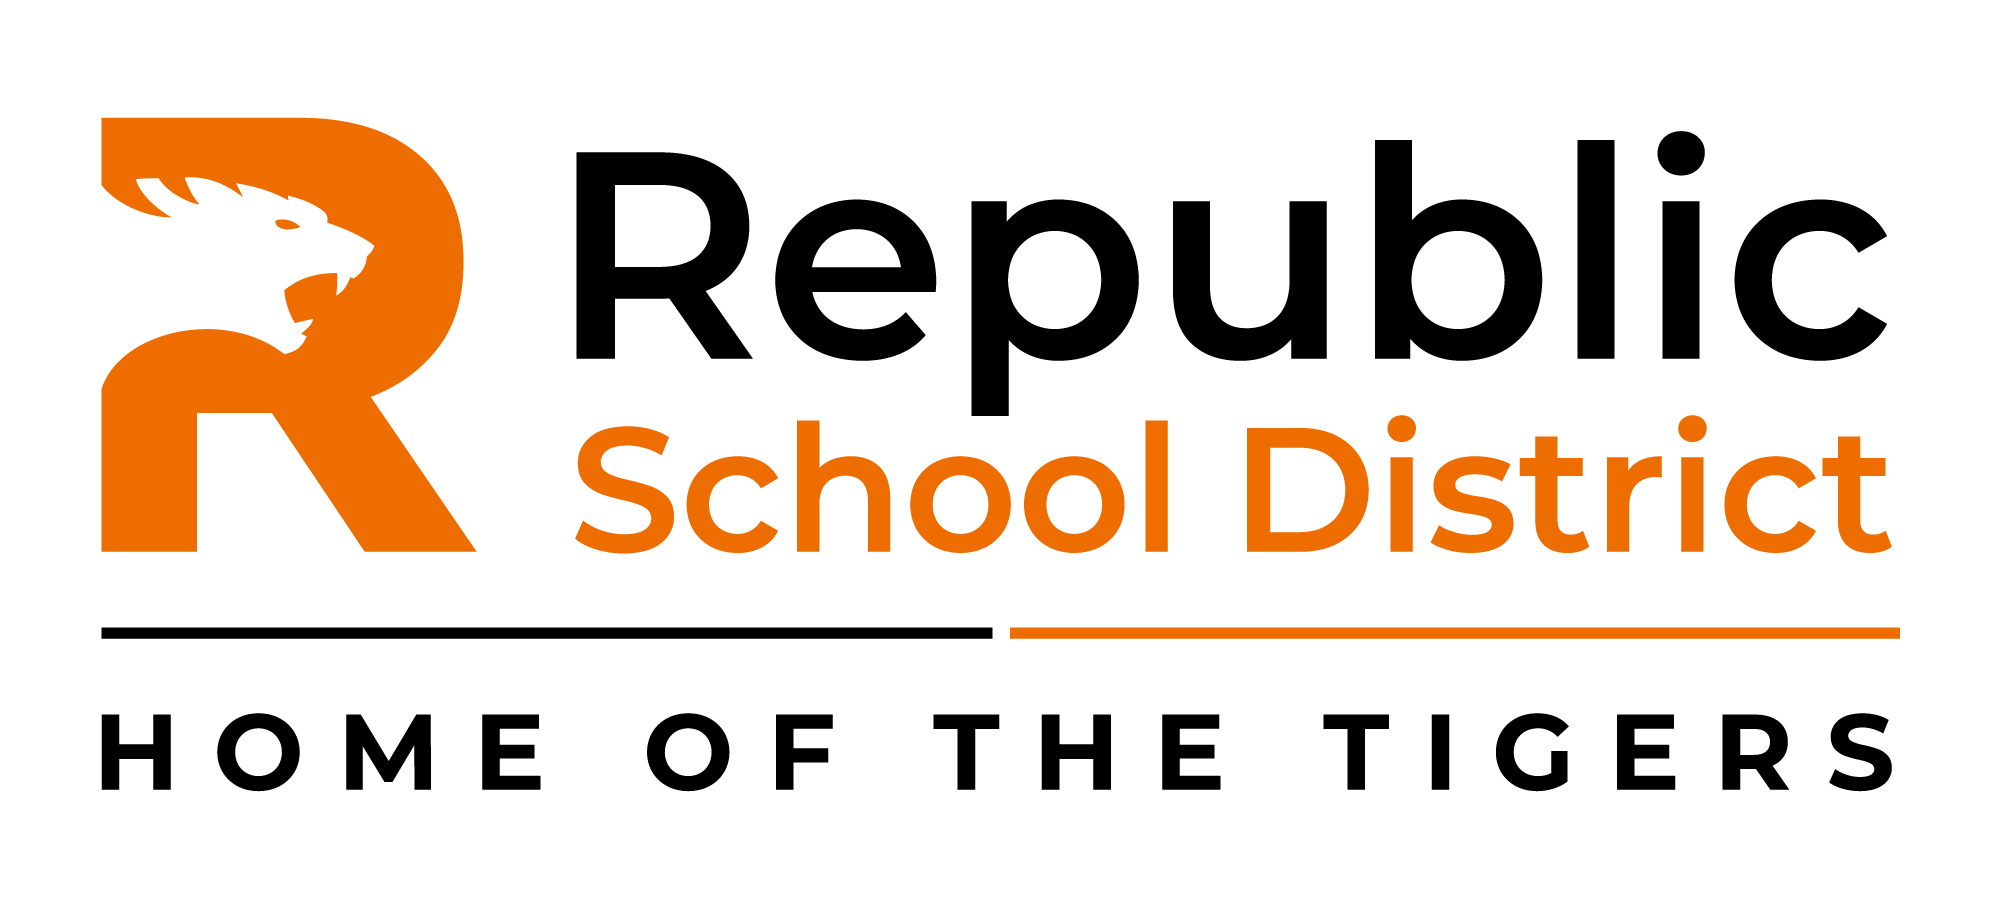 republic school district logo